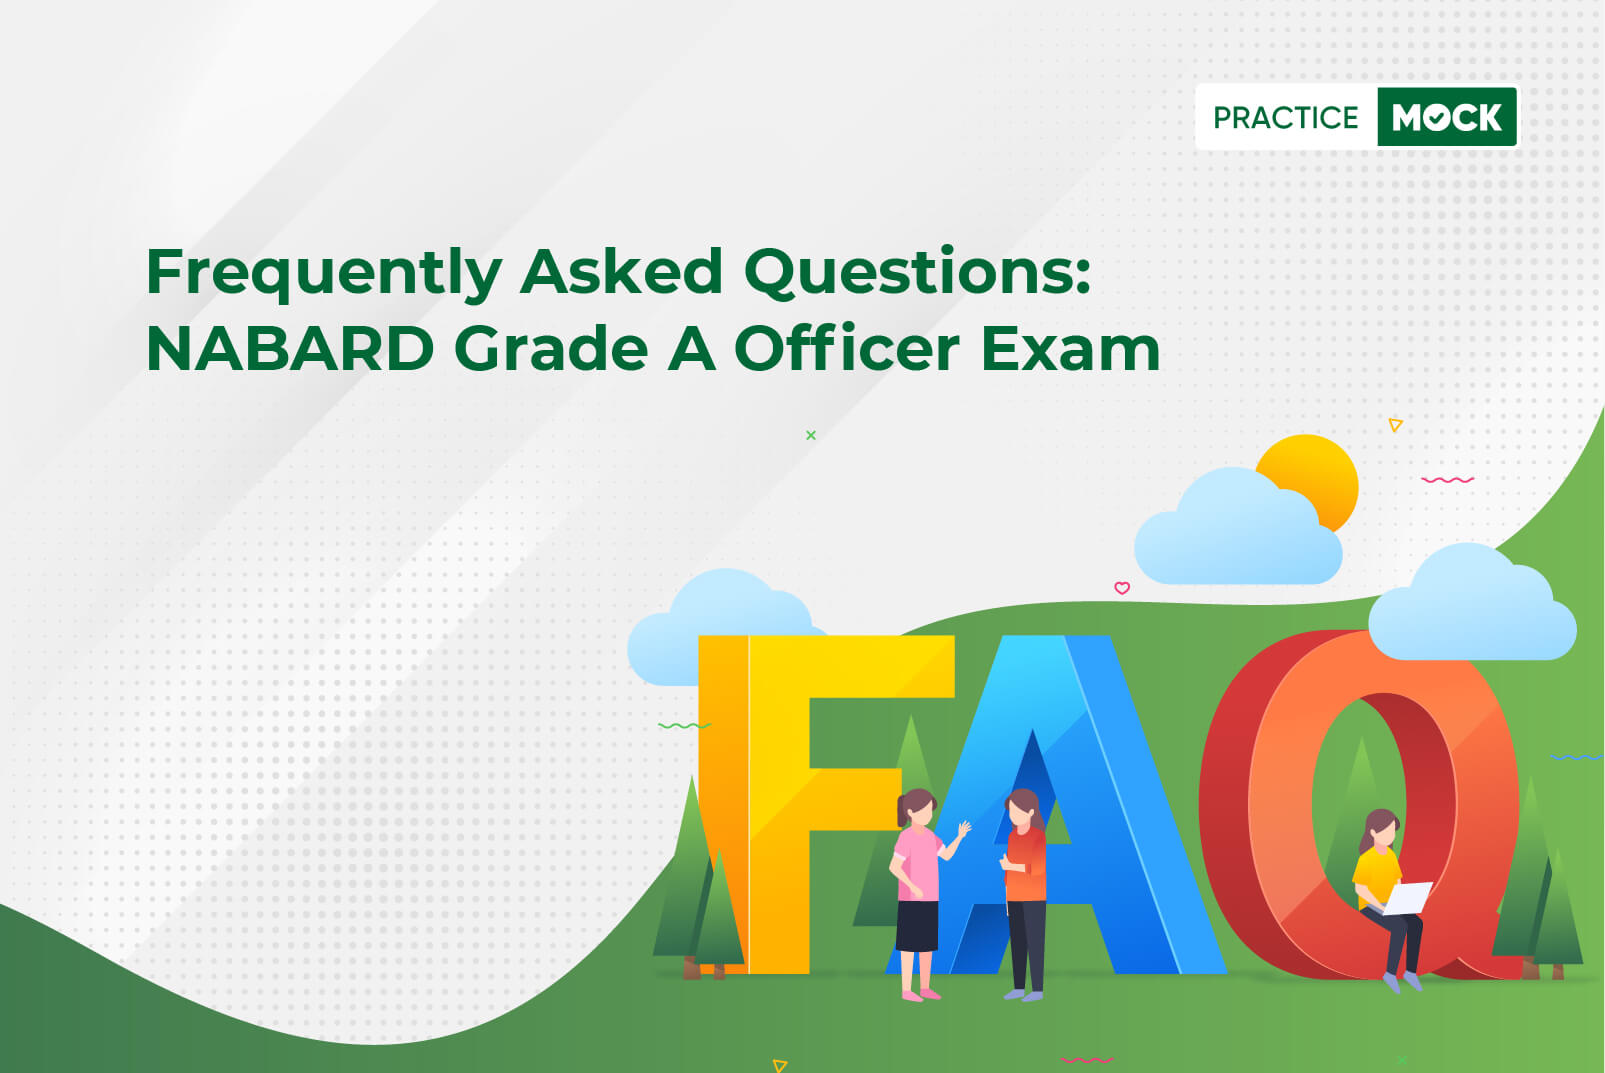 FAQs for NABARD Grade A Officer Exam